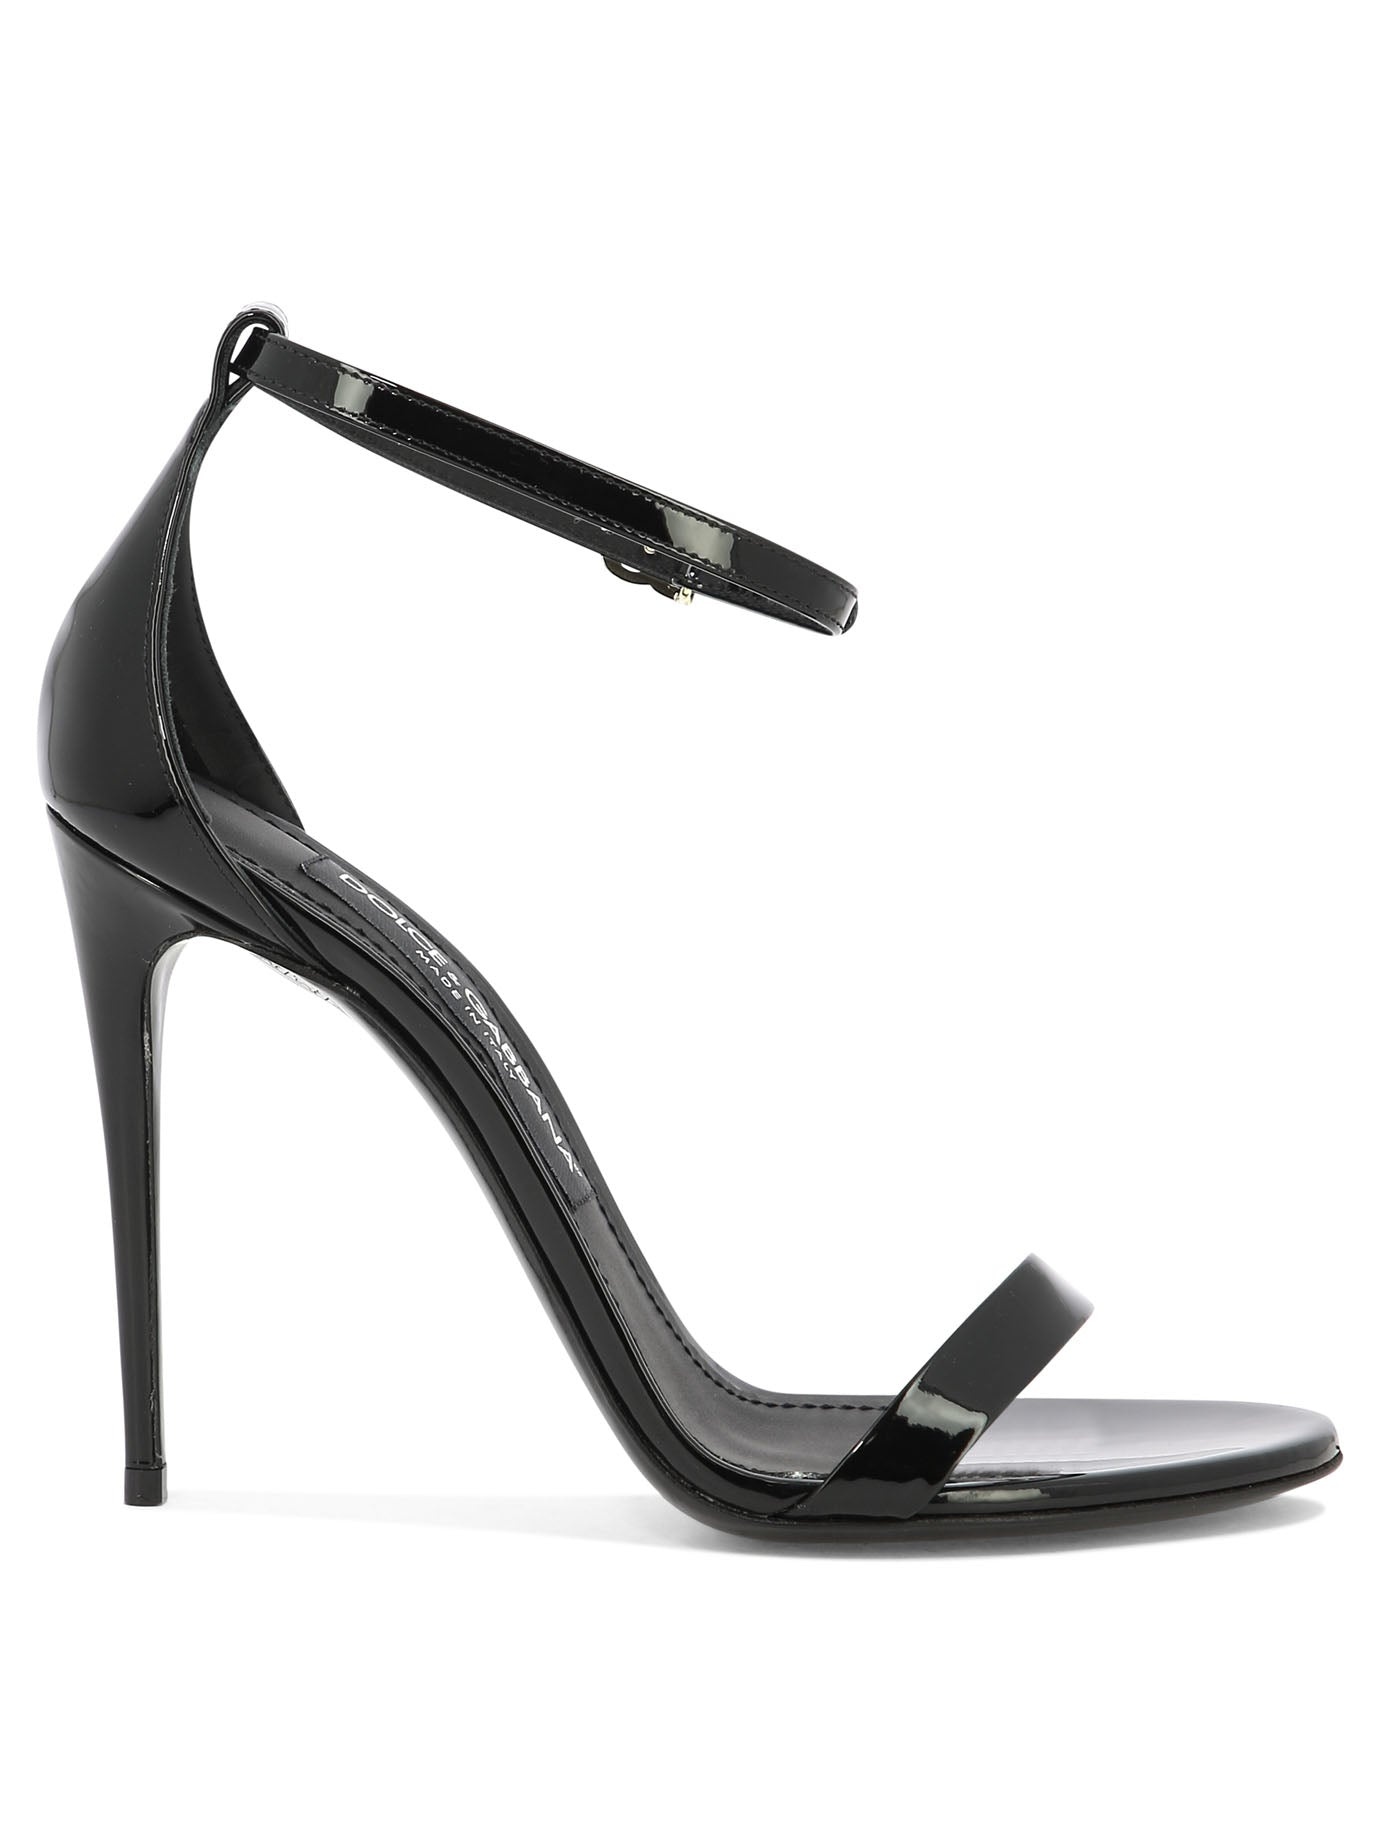 Dolce & Gabbana "Keira" Sandals - 1